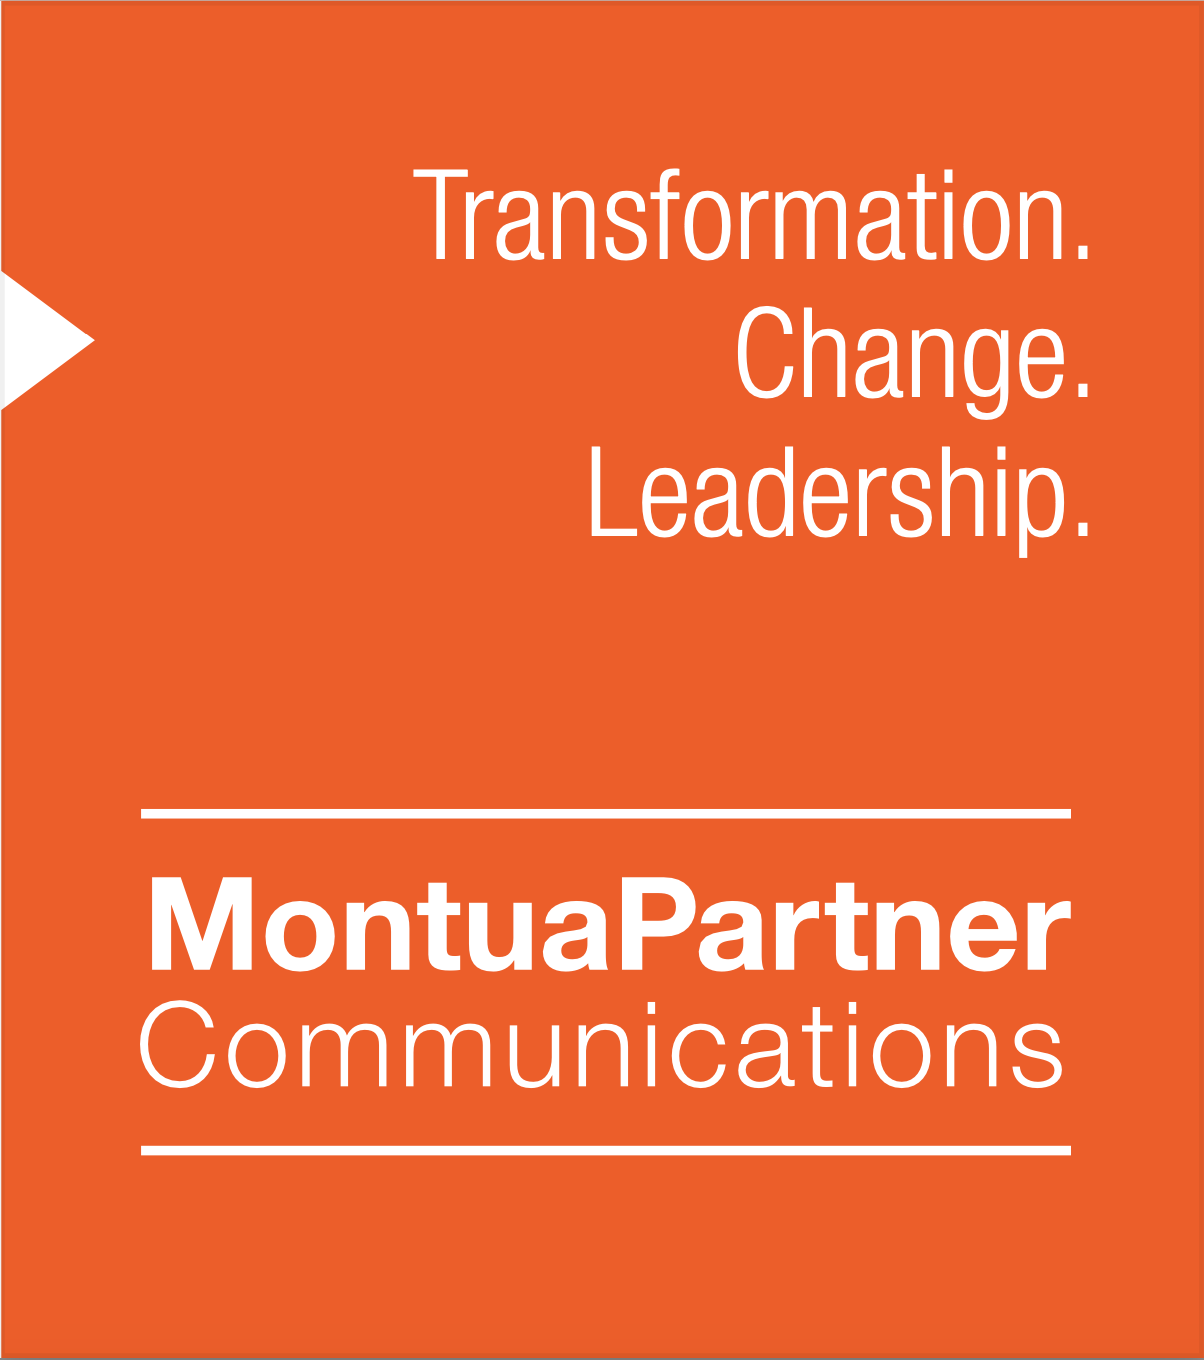 MontuaPartner Communications